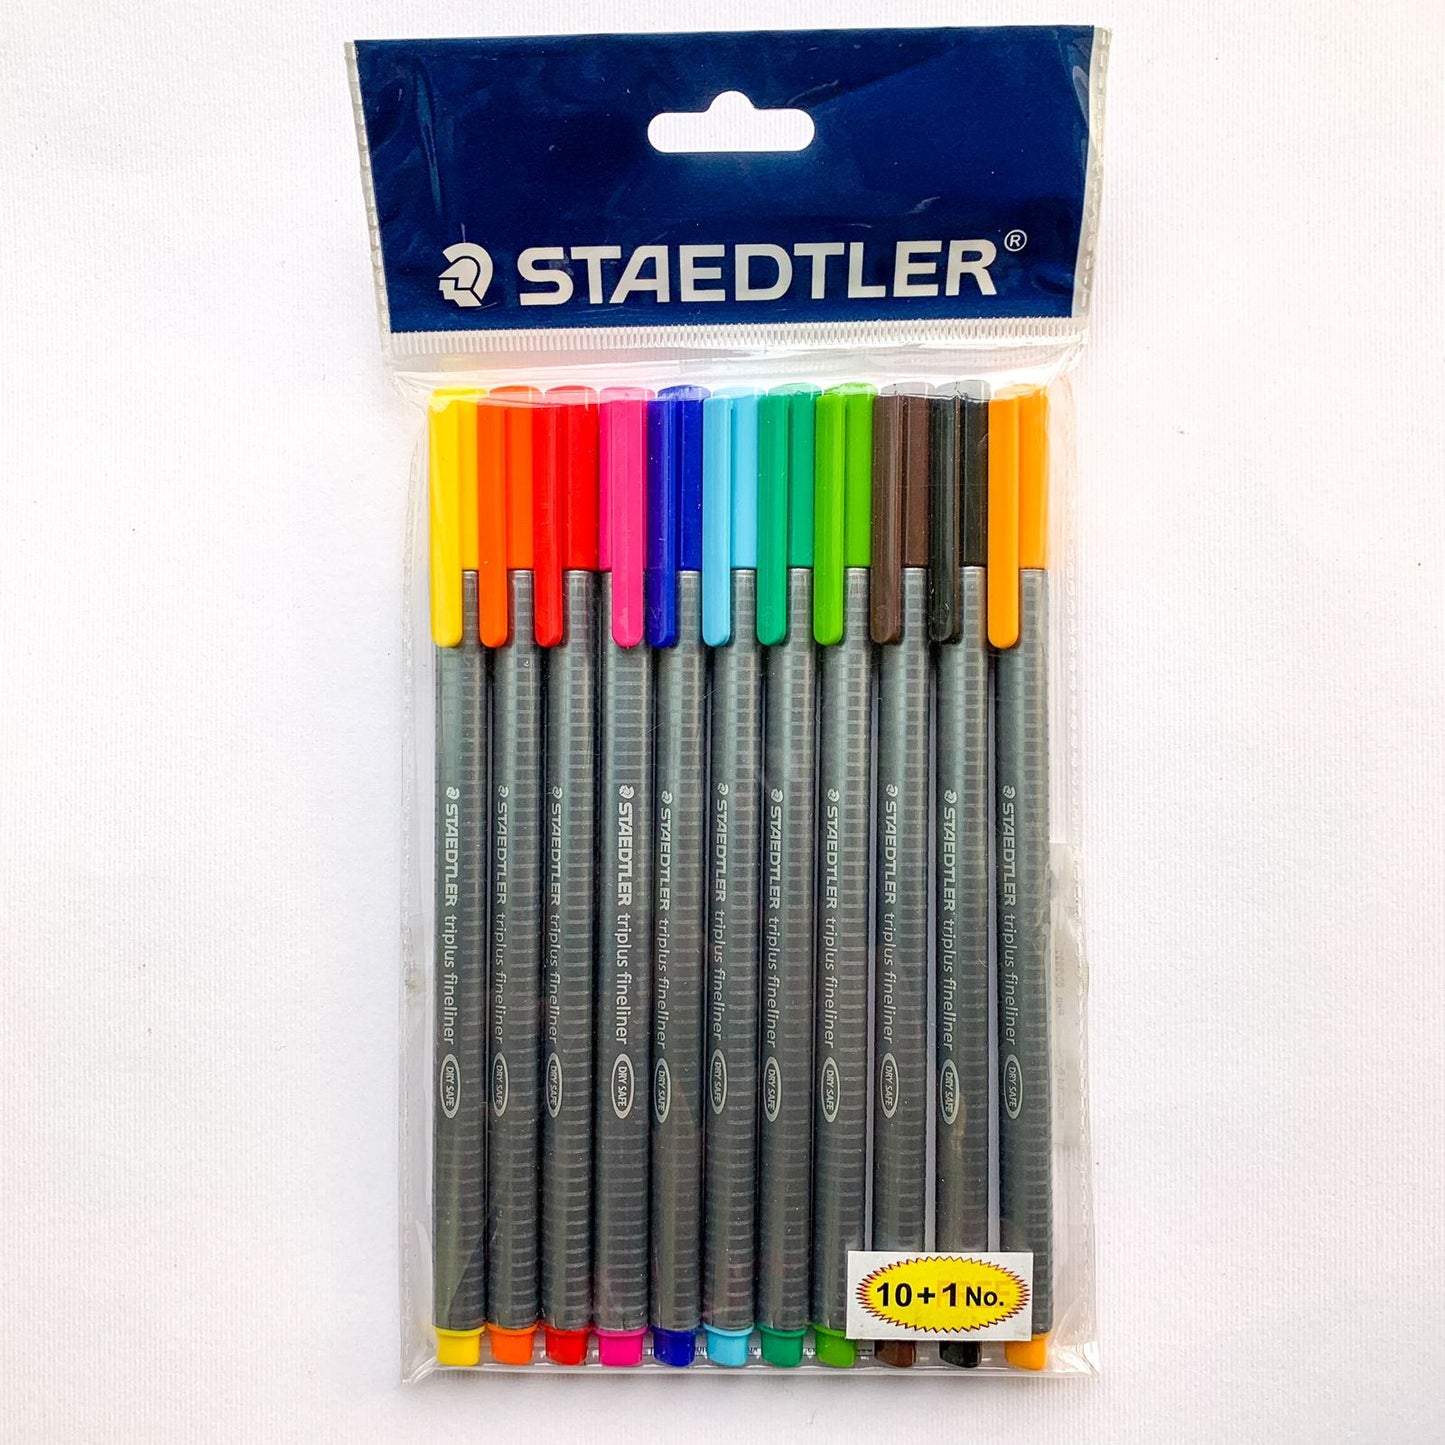 STAEDTLER - Fineliner Set of 10 + 1 Free | Transparent packaging containing 10 + 1 fineliner for free